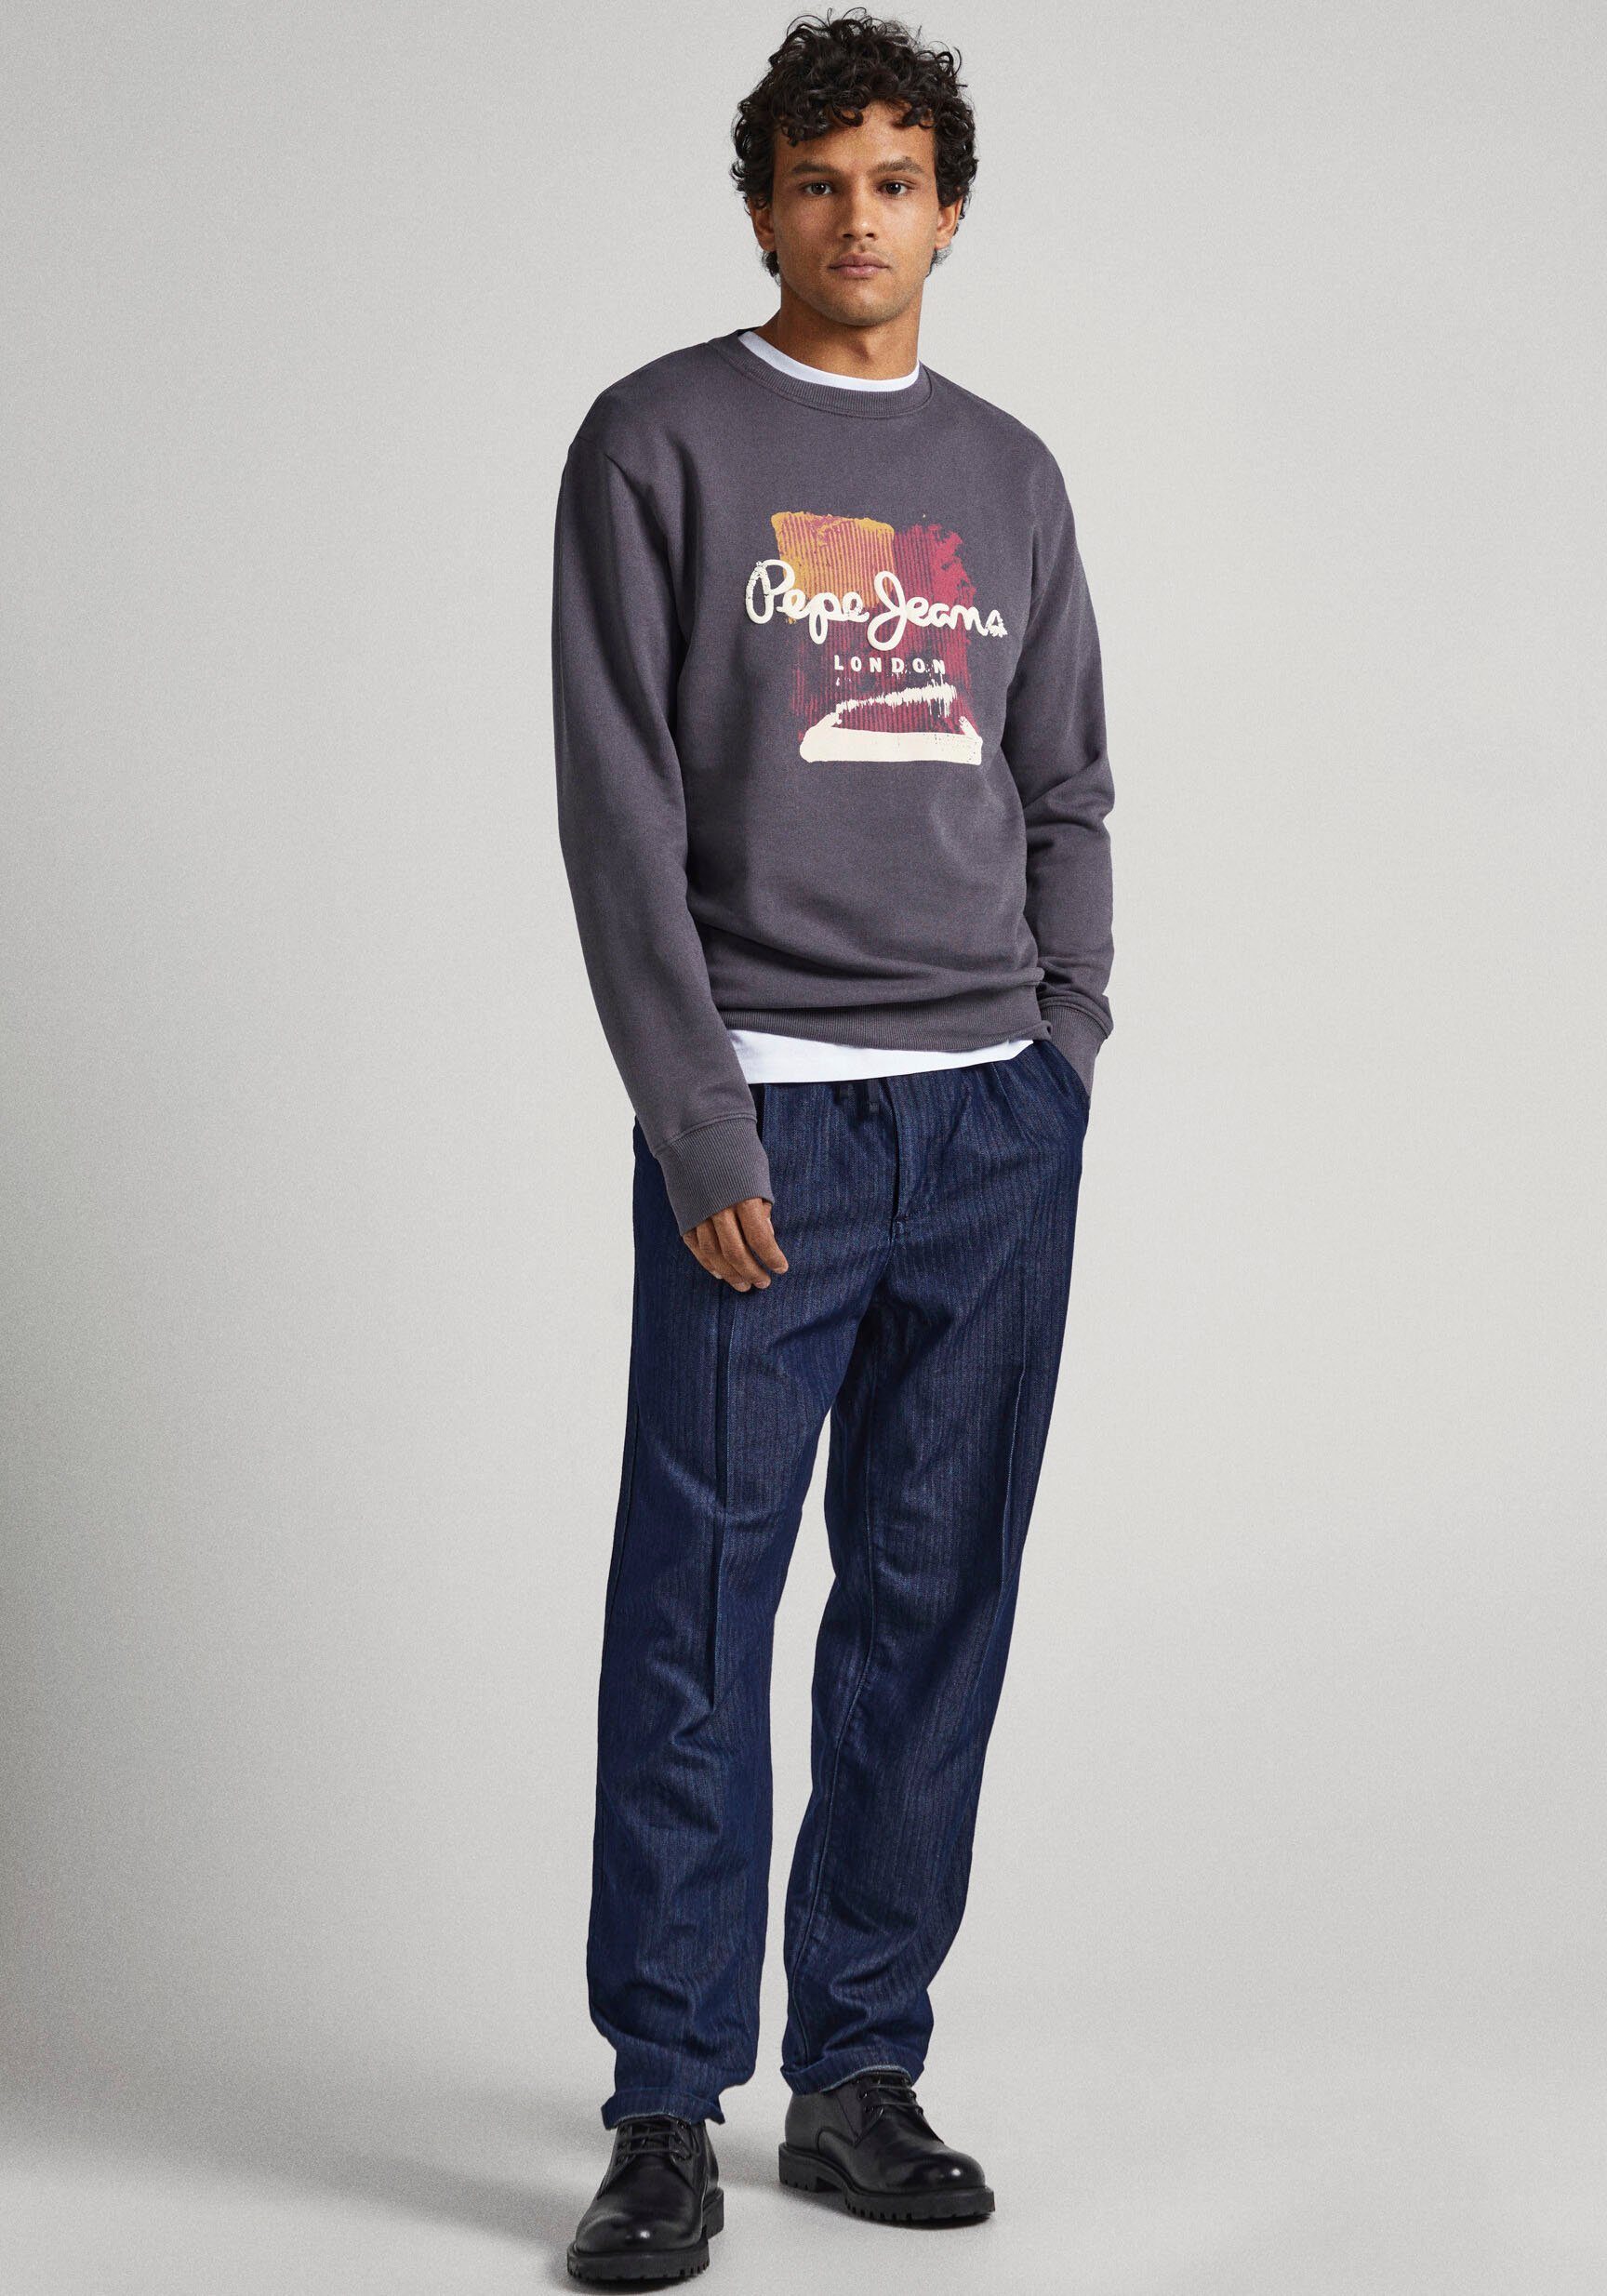 Pepe MELBOURNE Jeans Sweatshirt